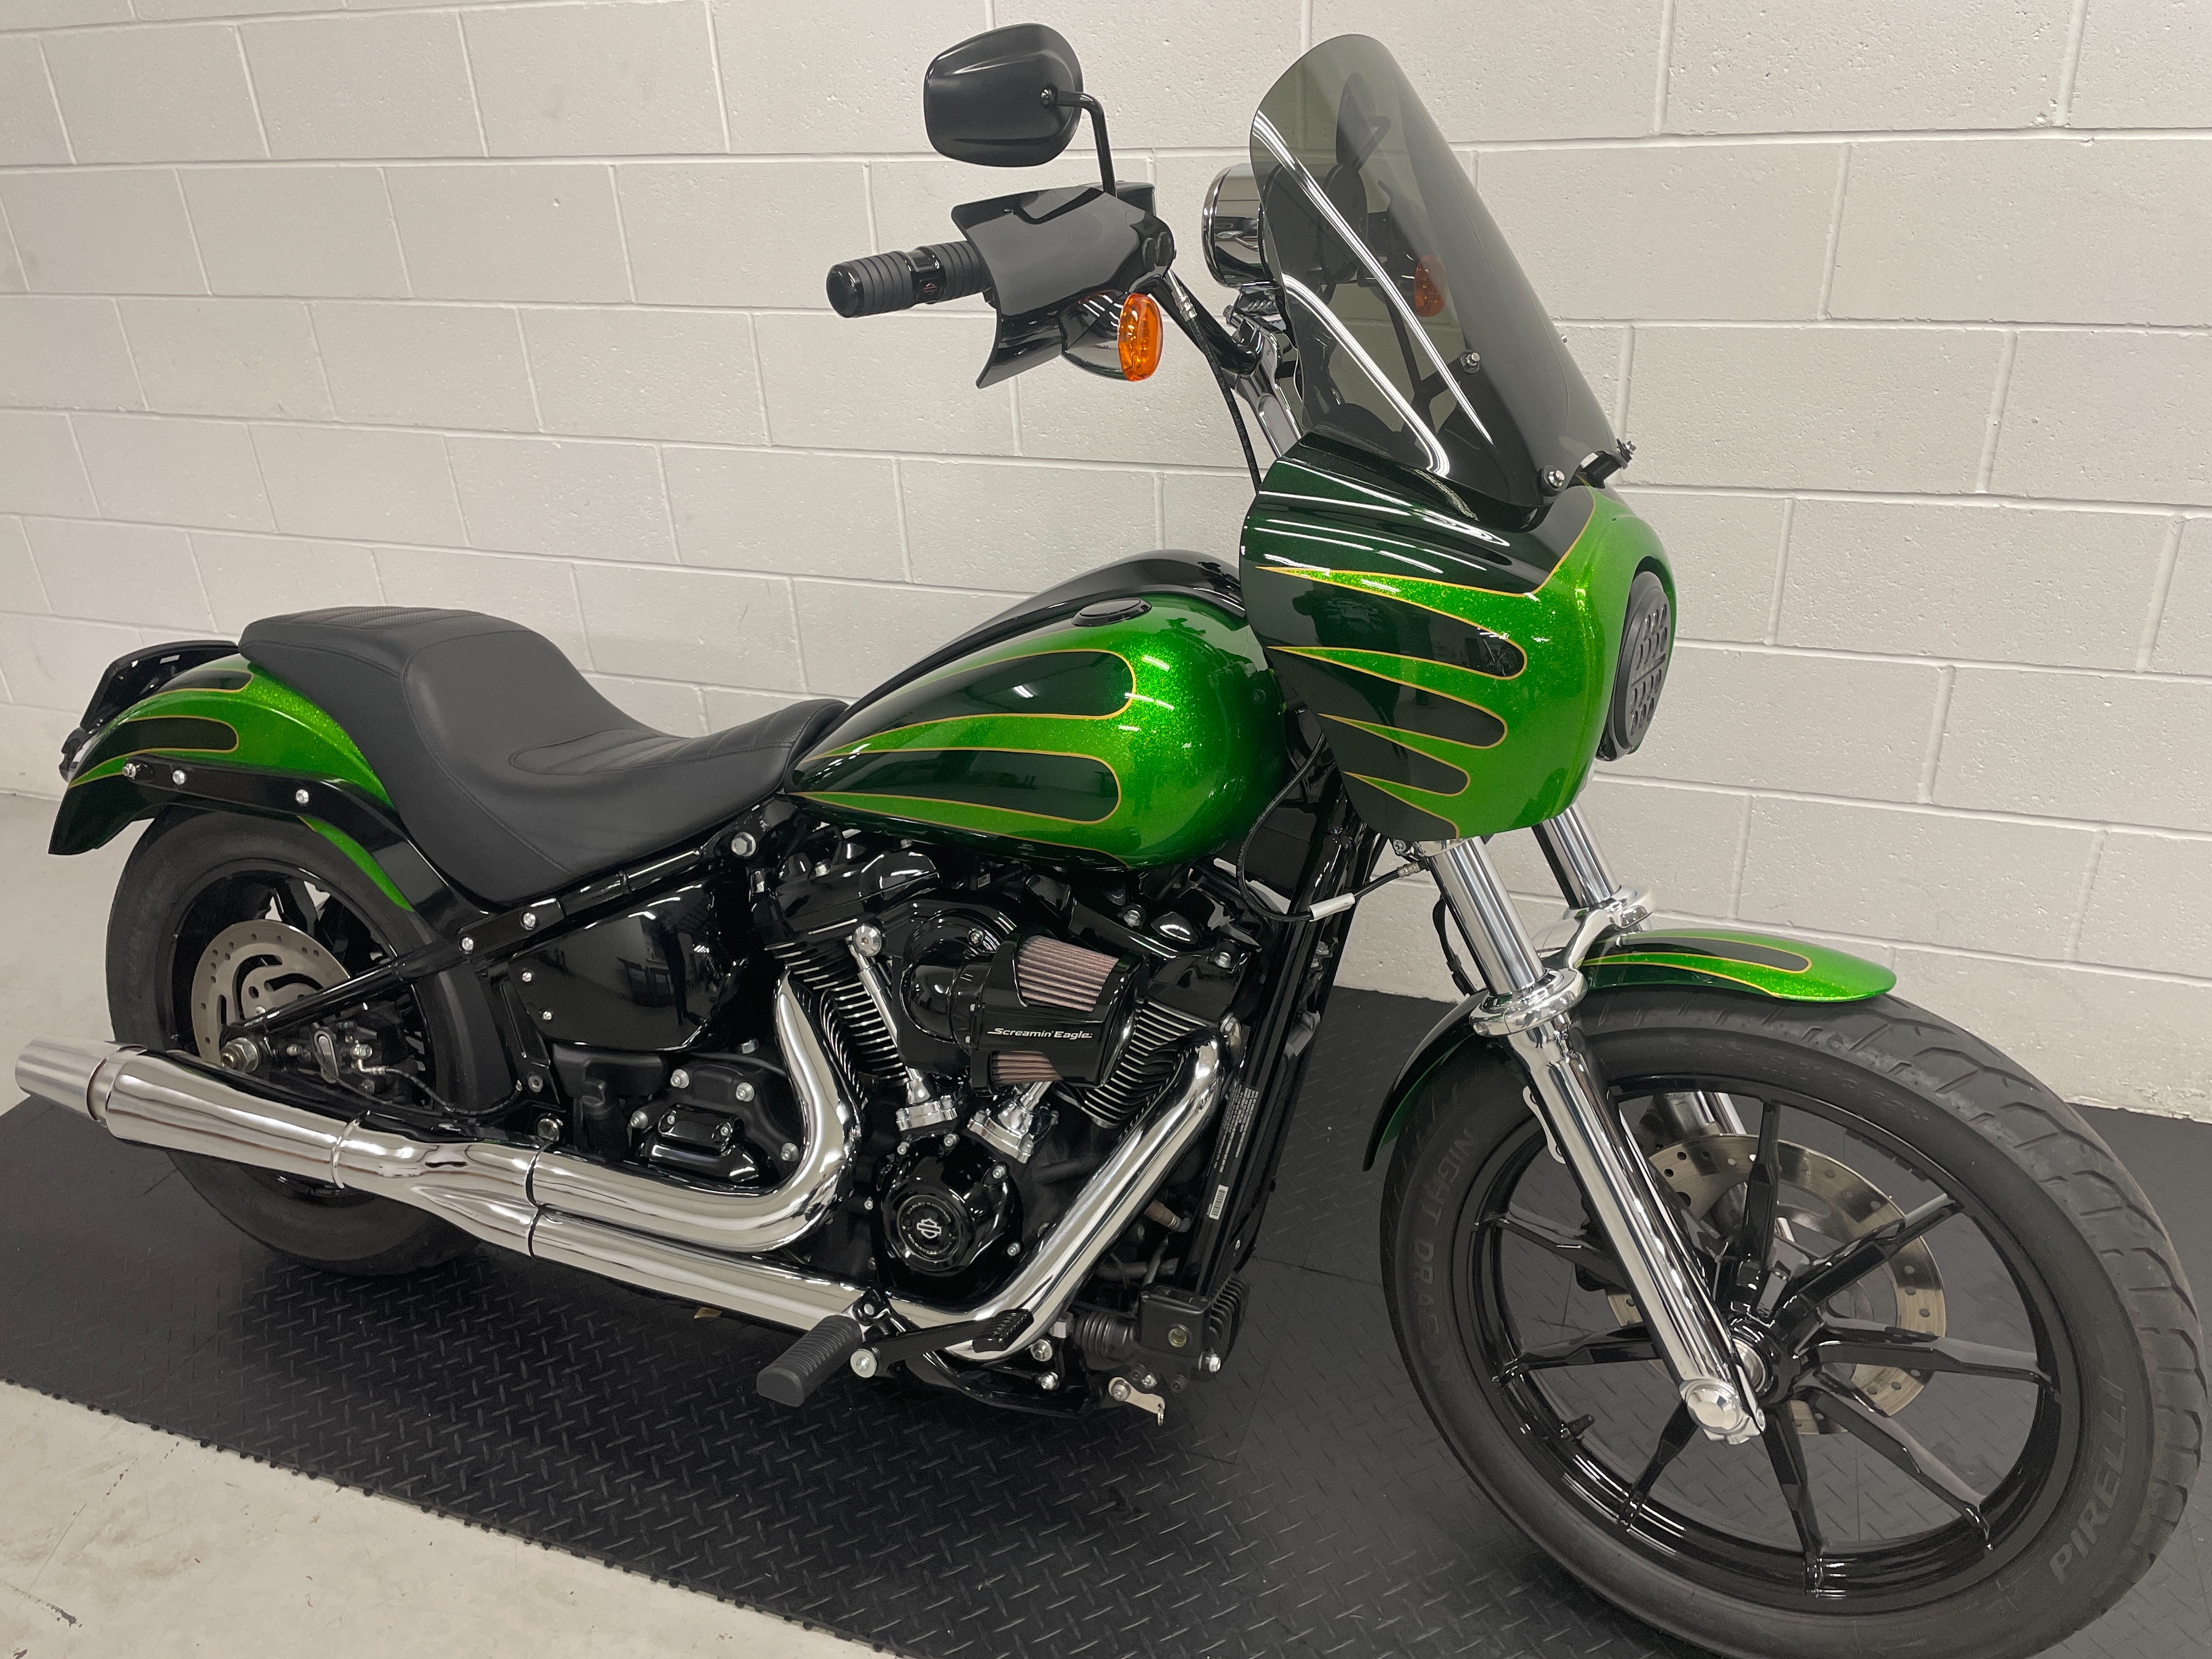 2019 Harley-Davidson Softail Low Rider at Destination Harley-Davidson®, Silverdale, WA 98383